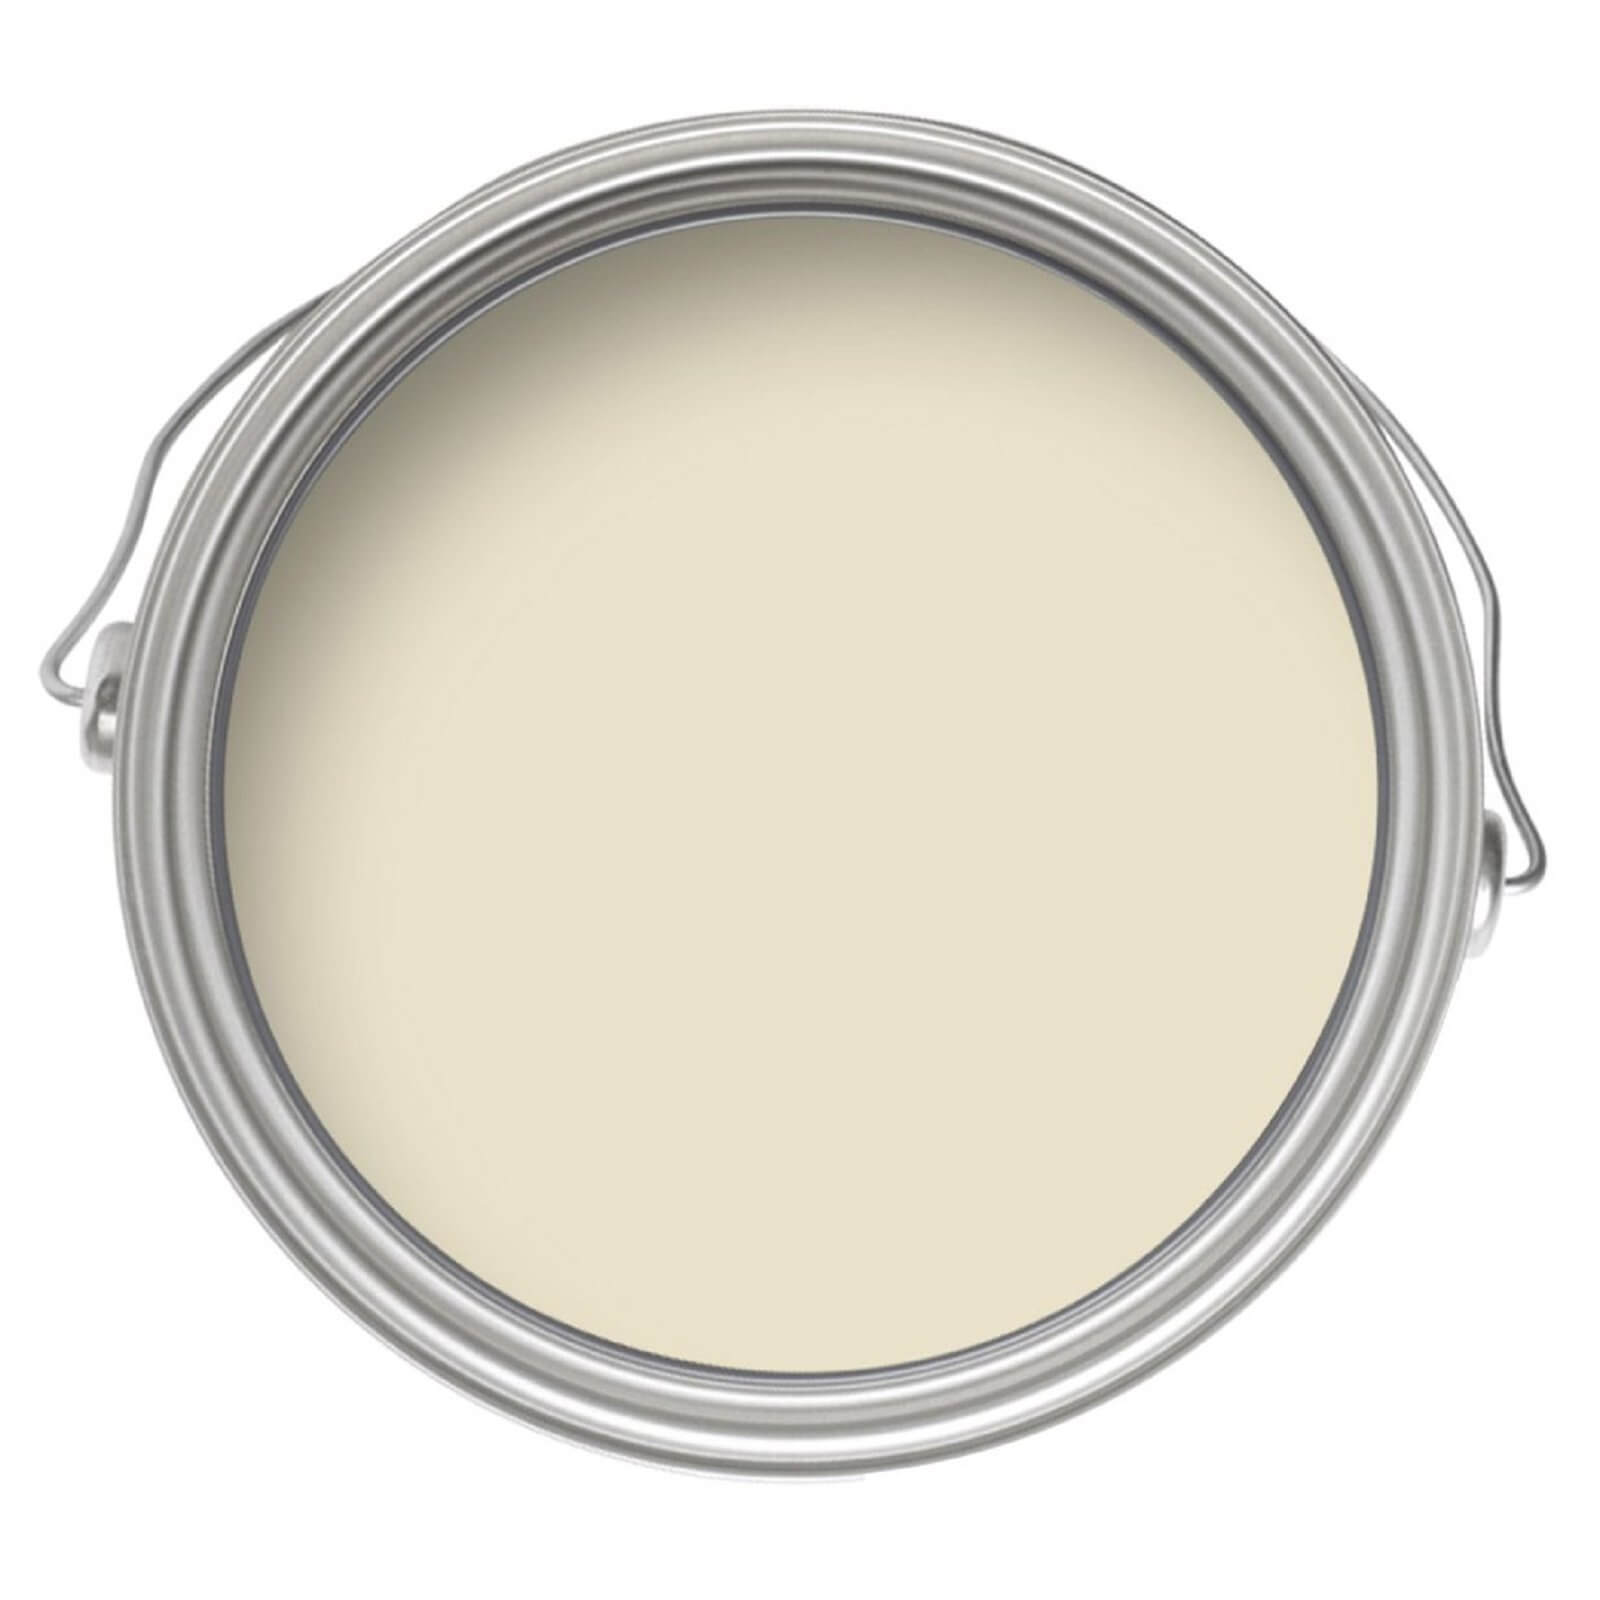 Crown Period Collection Parsonage Cream - Flat Matt Emulsion Paint - 2.5L